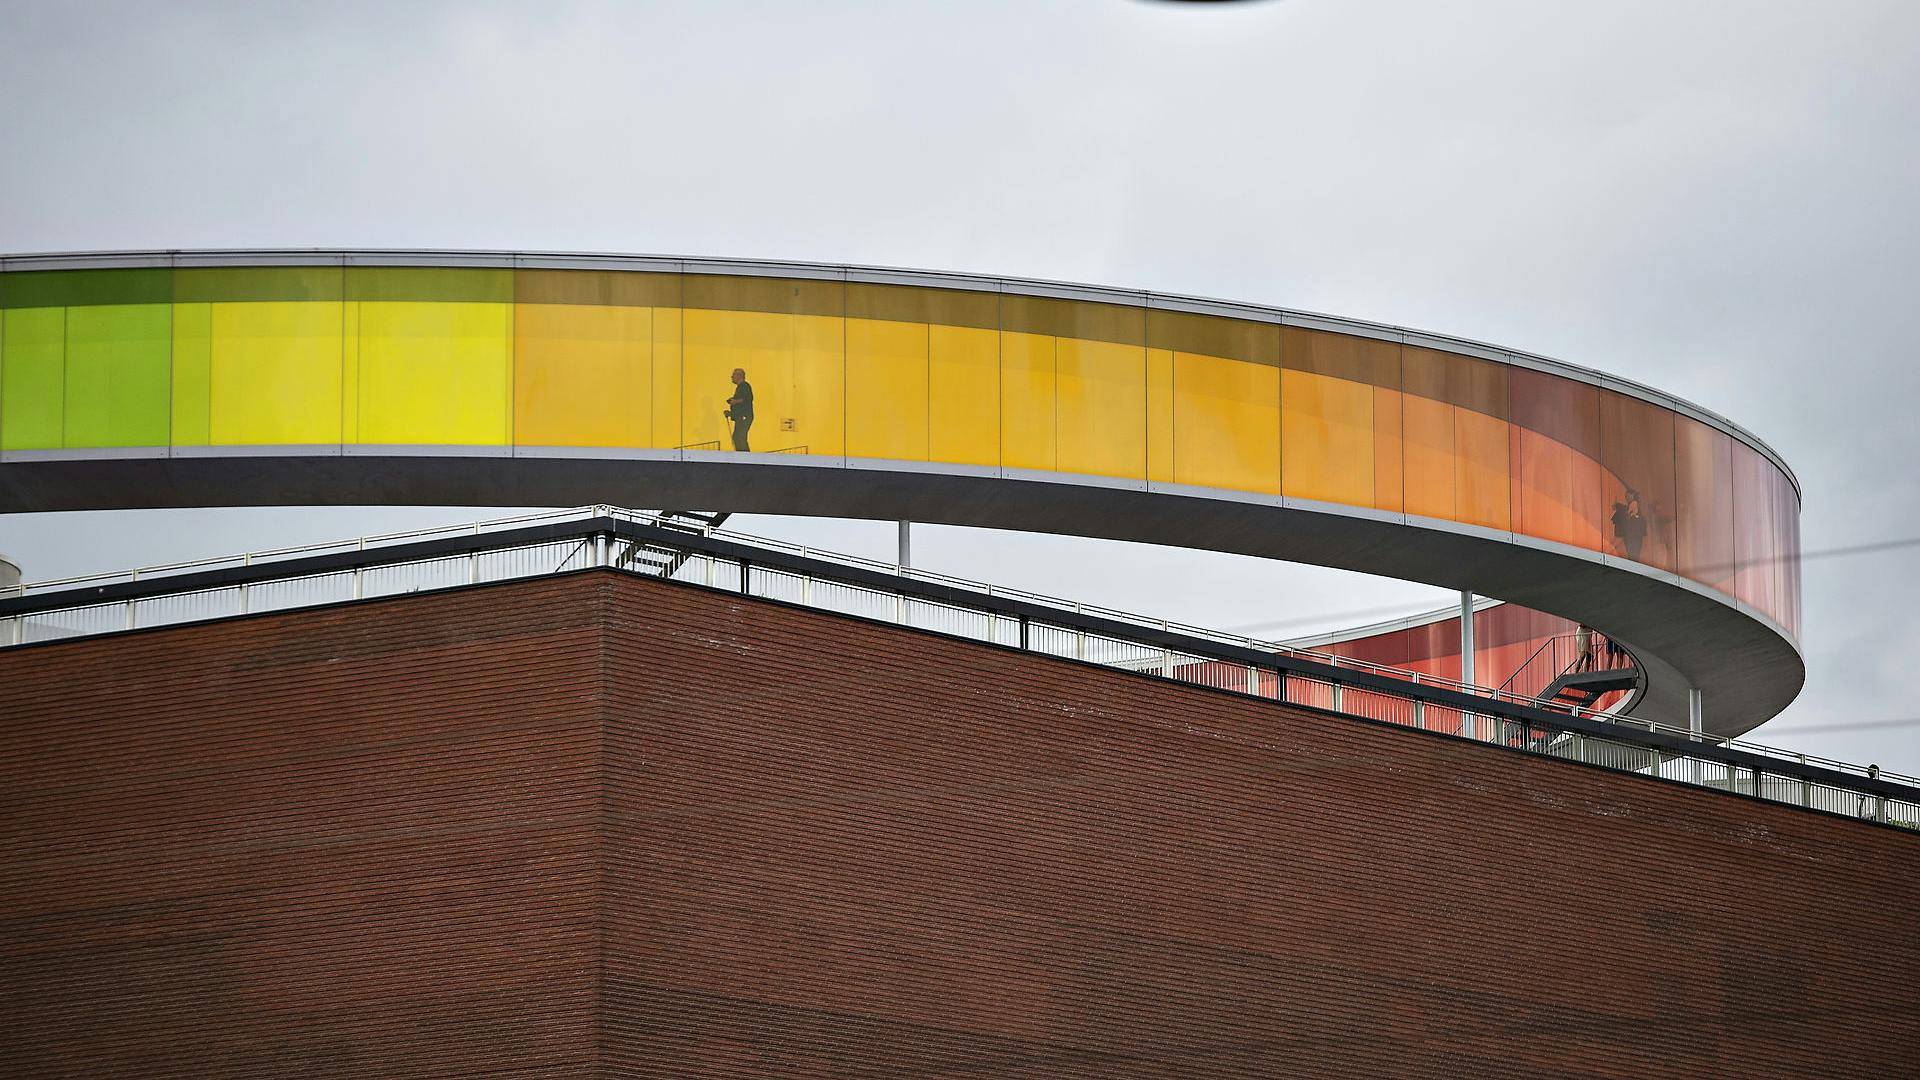 Regnbuen på kunstmuseet Aros vil ikke oplyse natten i Aarhus fremover.&nbsp;